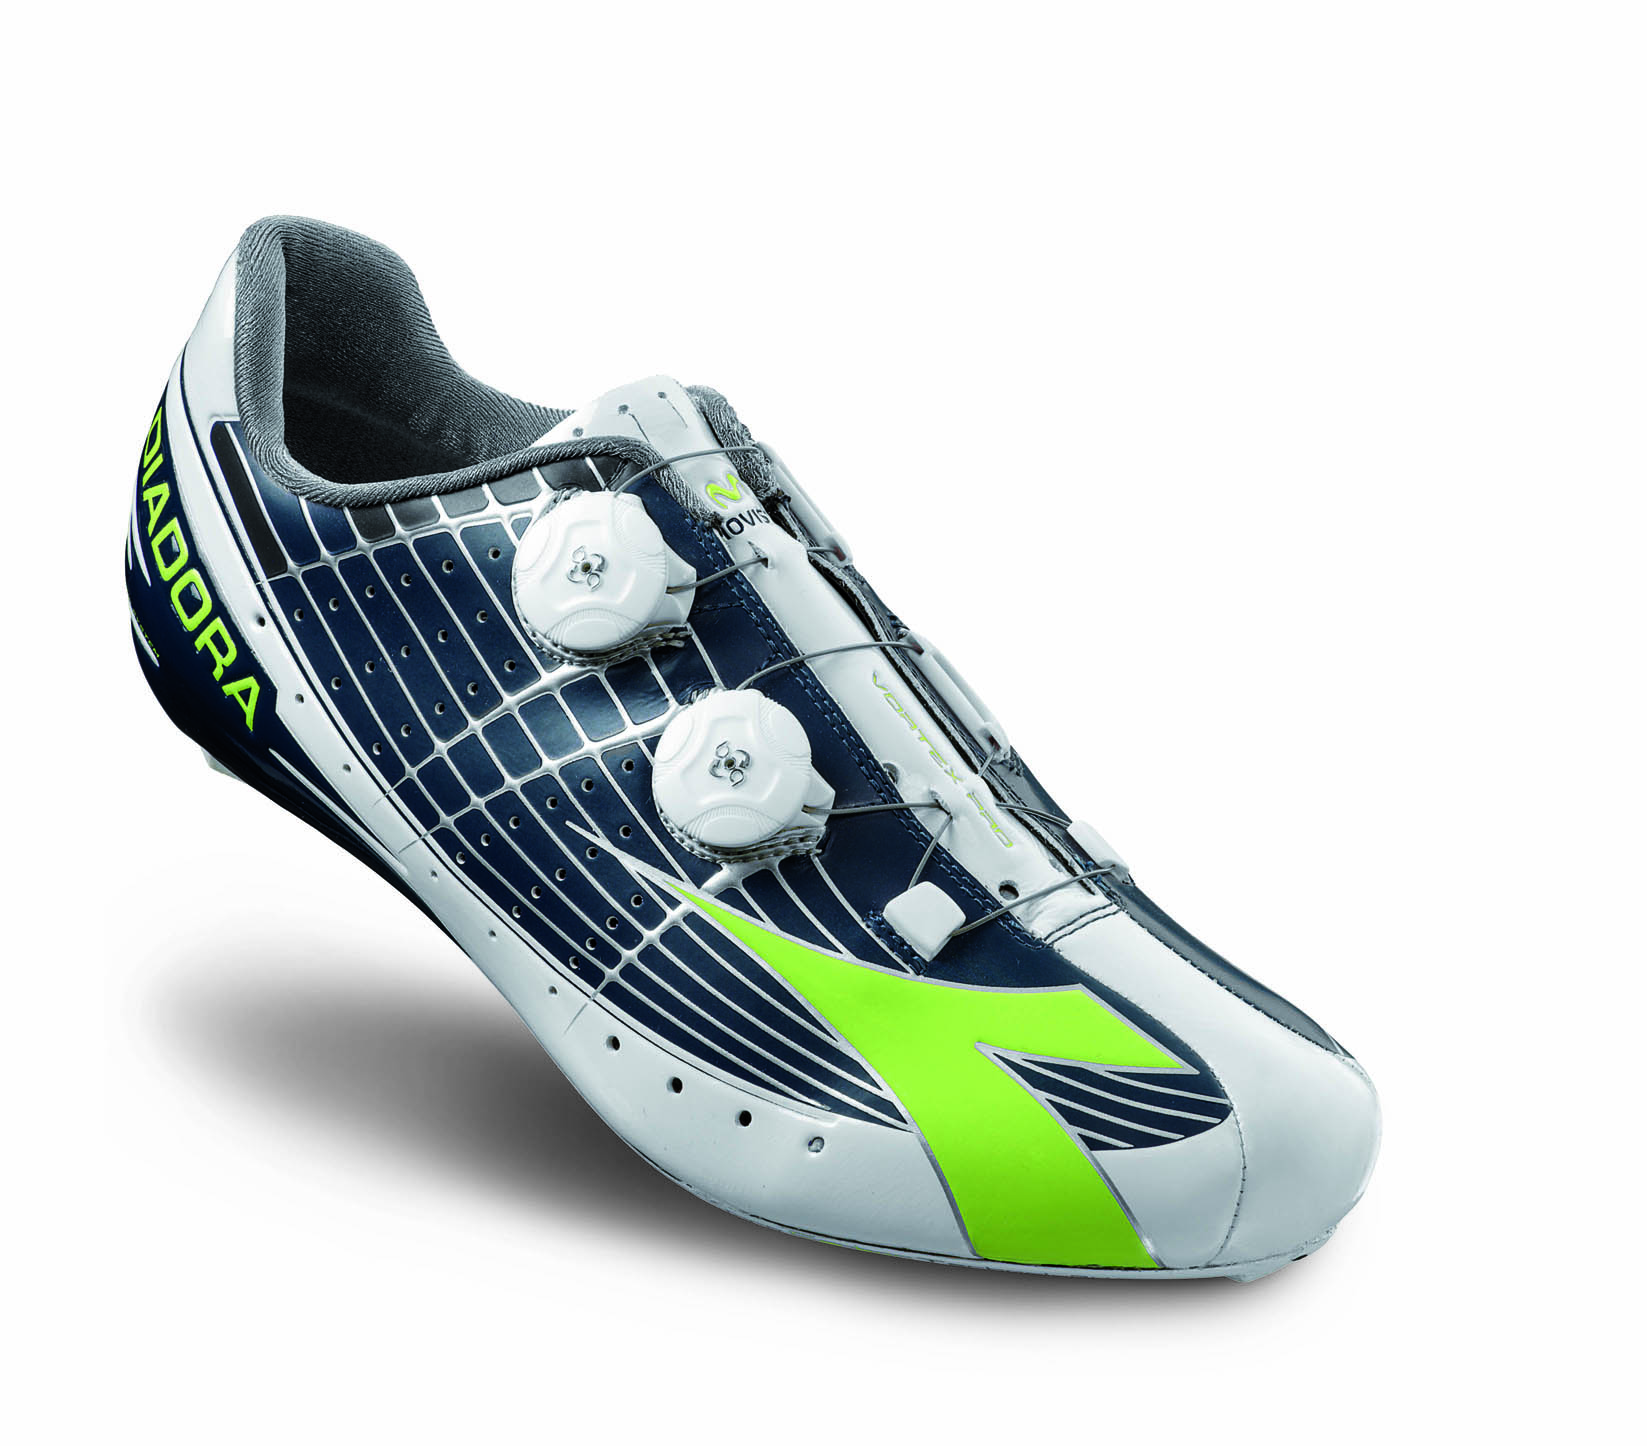 Diadora Vortex Pro Movistar Limited Edition road shoes